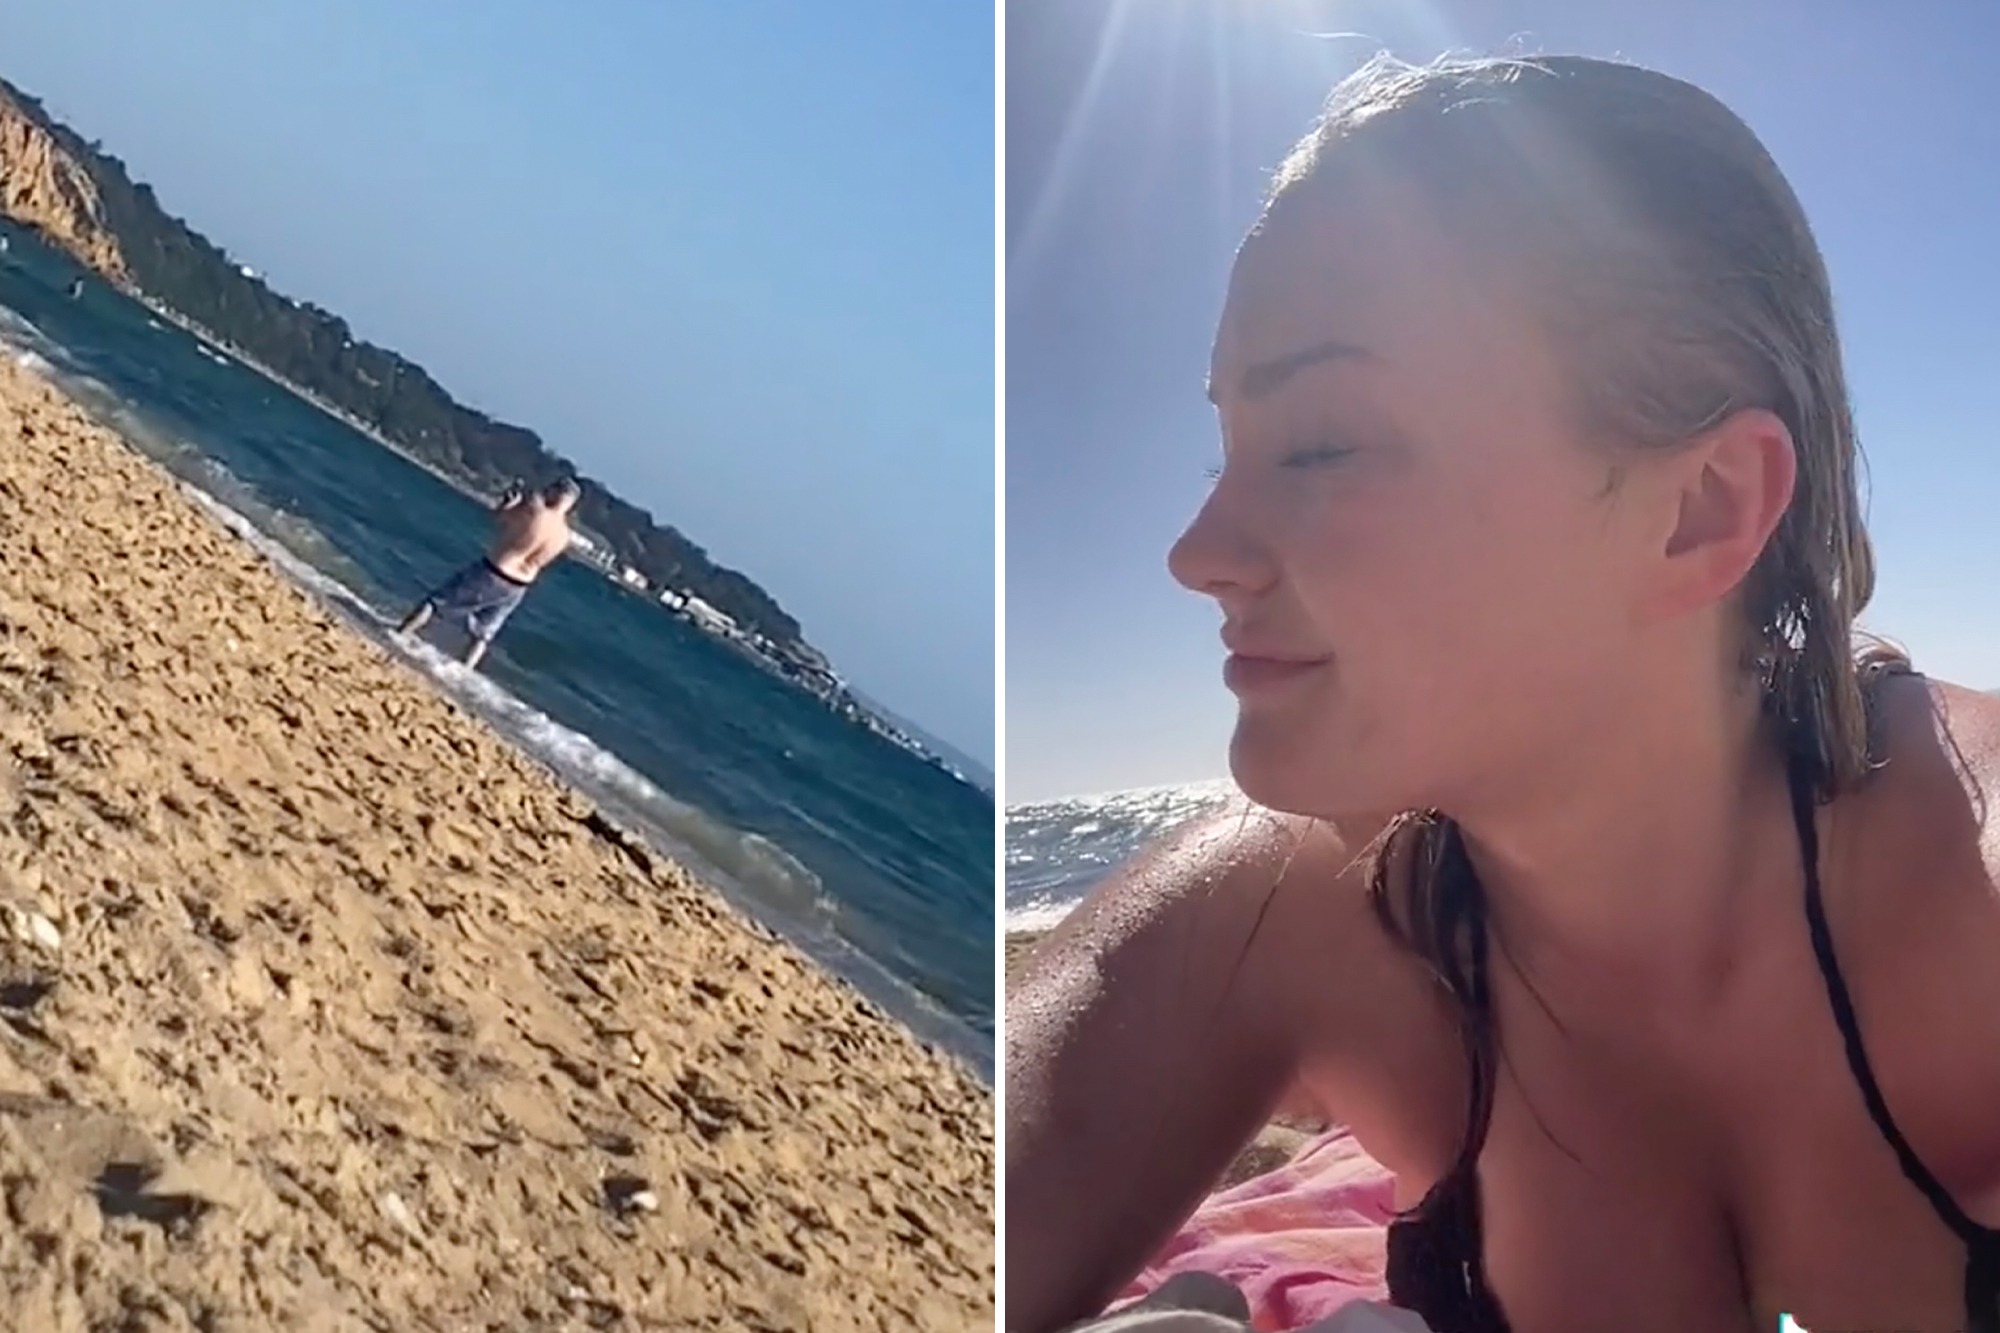 dimitris karanikas recommends wife caught sunbathing nude pic